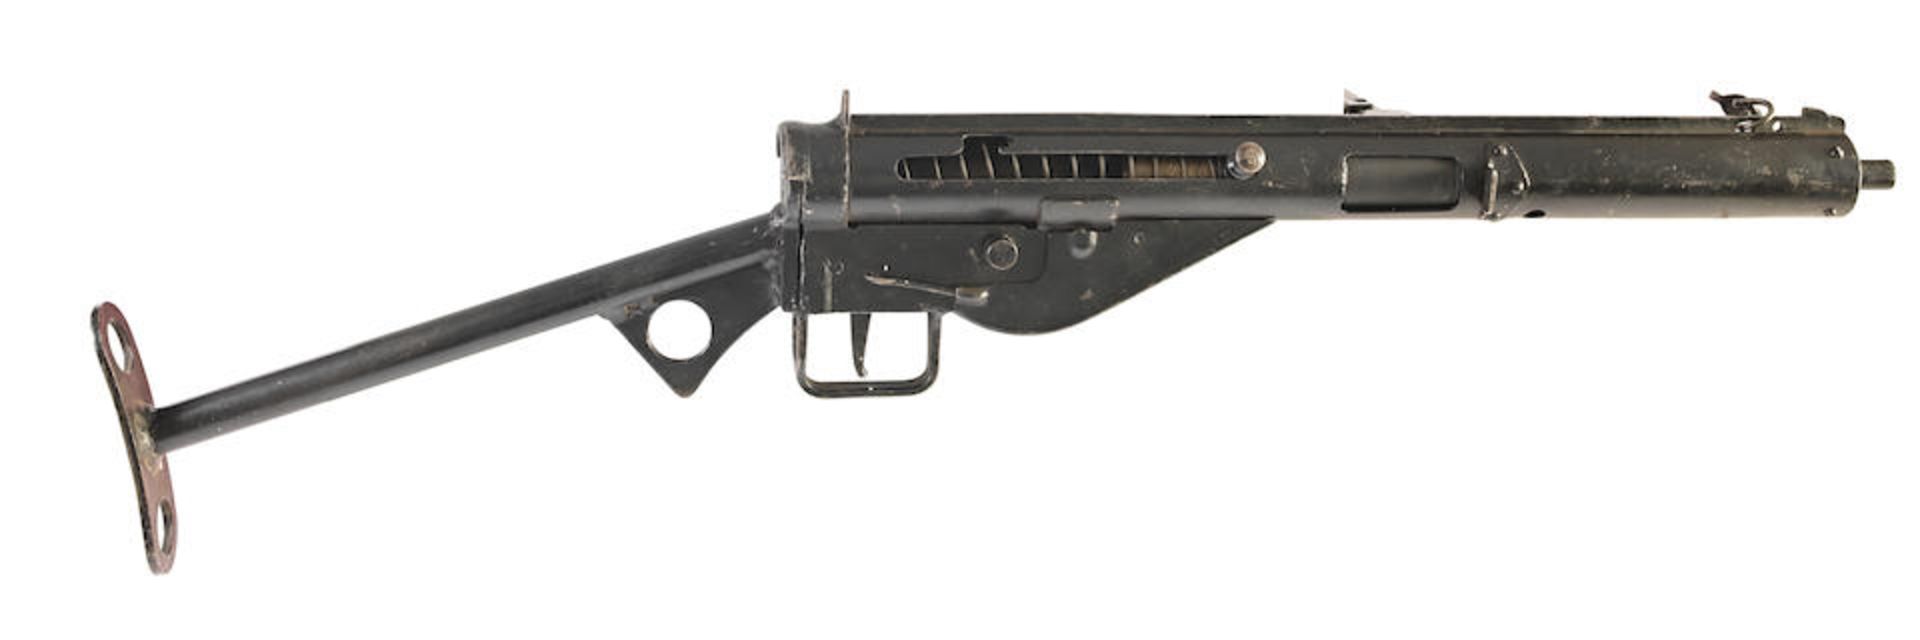 A deactivated 9x19mm (para) 'STEN' sub-machine gun by Enfield, no. 8059/18057 With its deactivat...